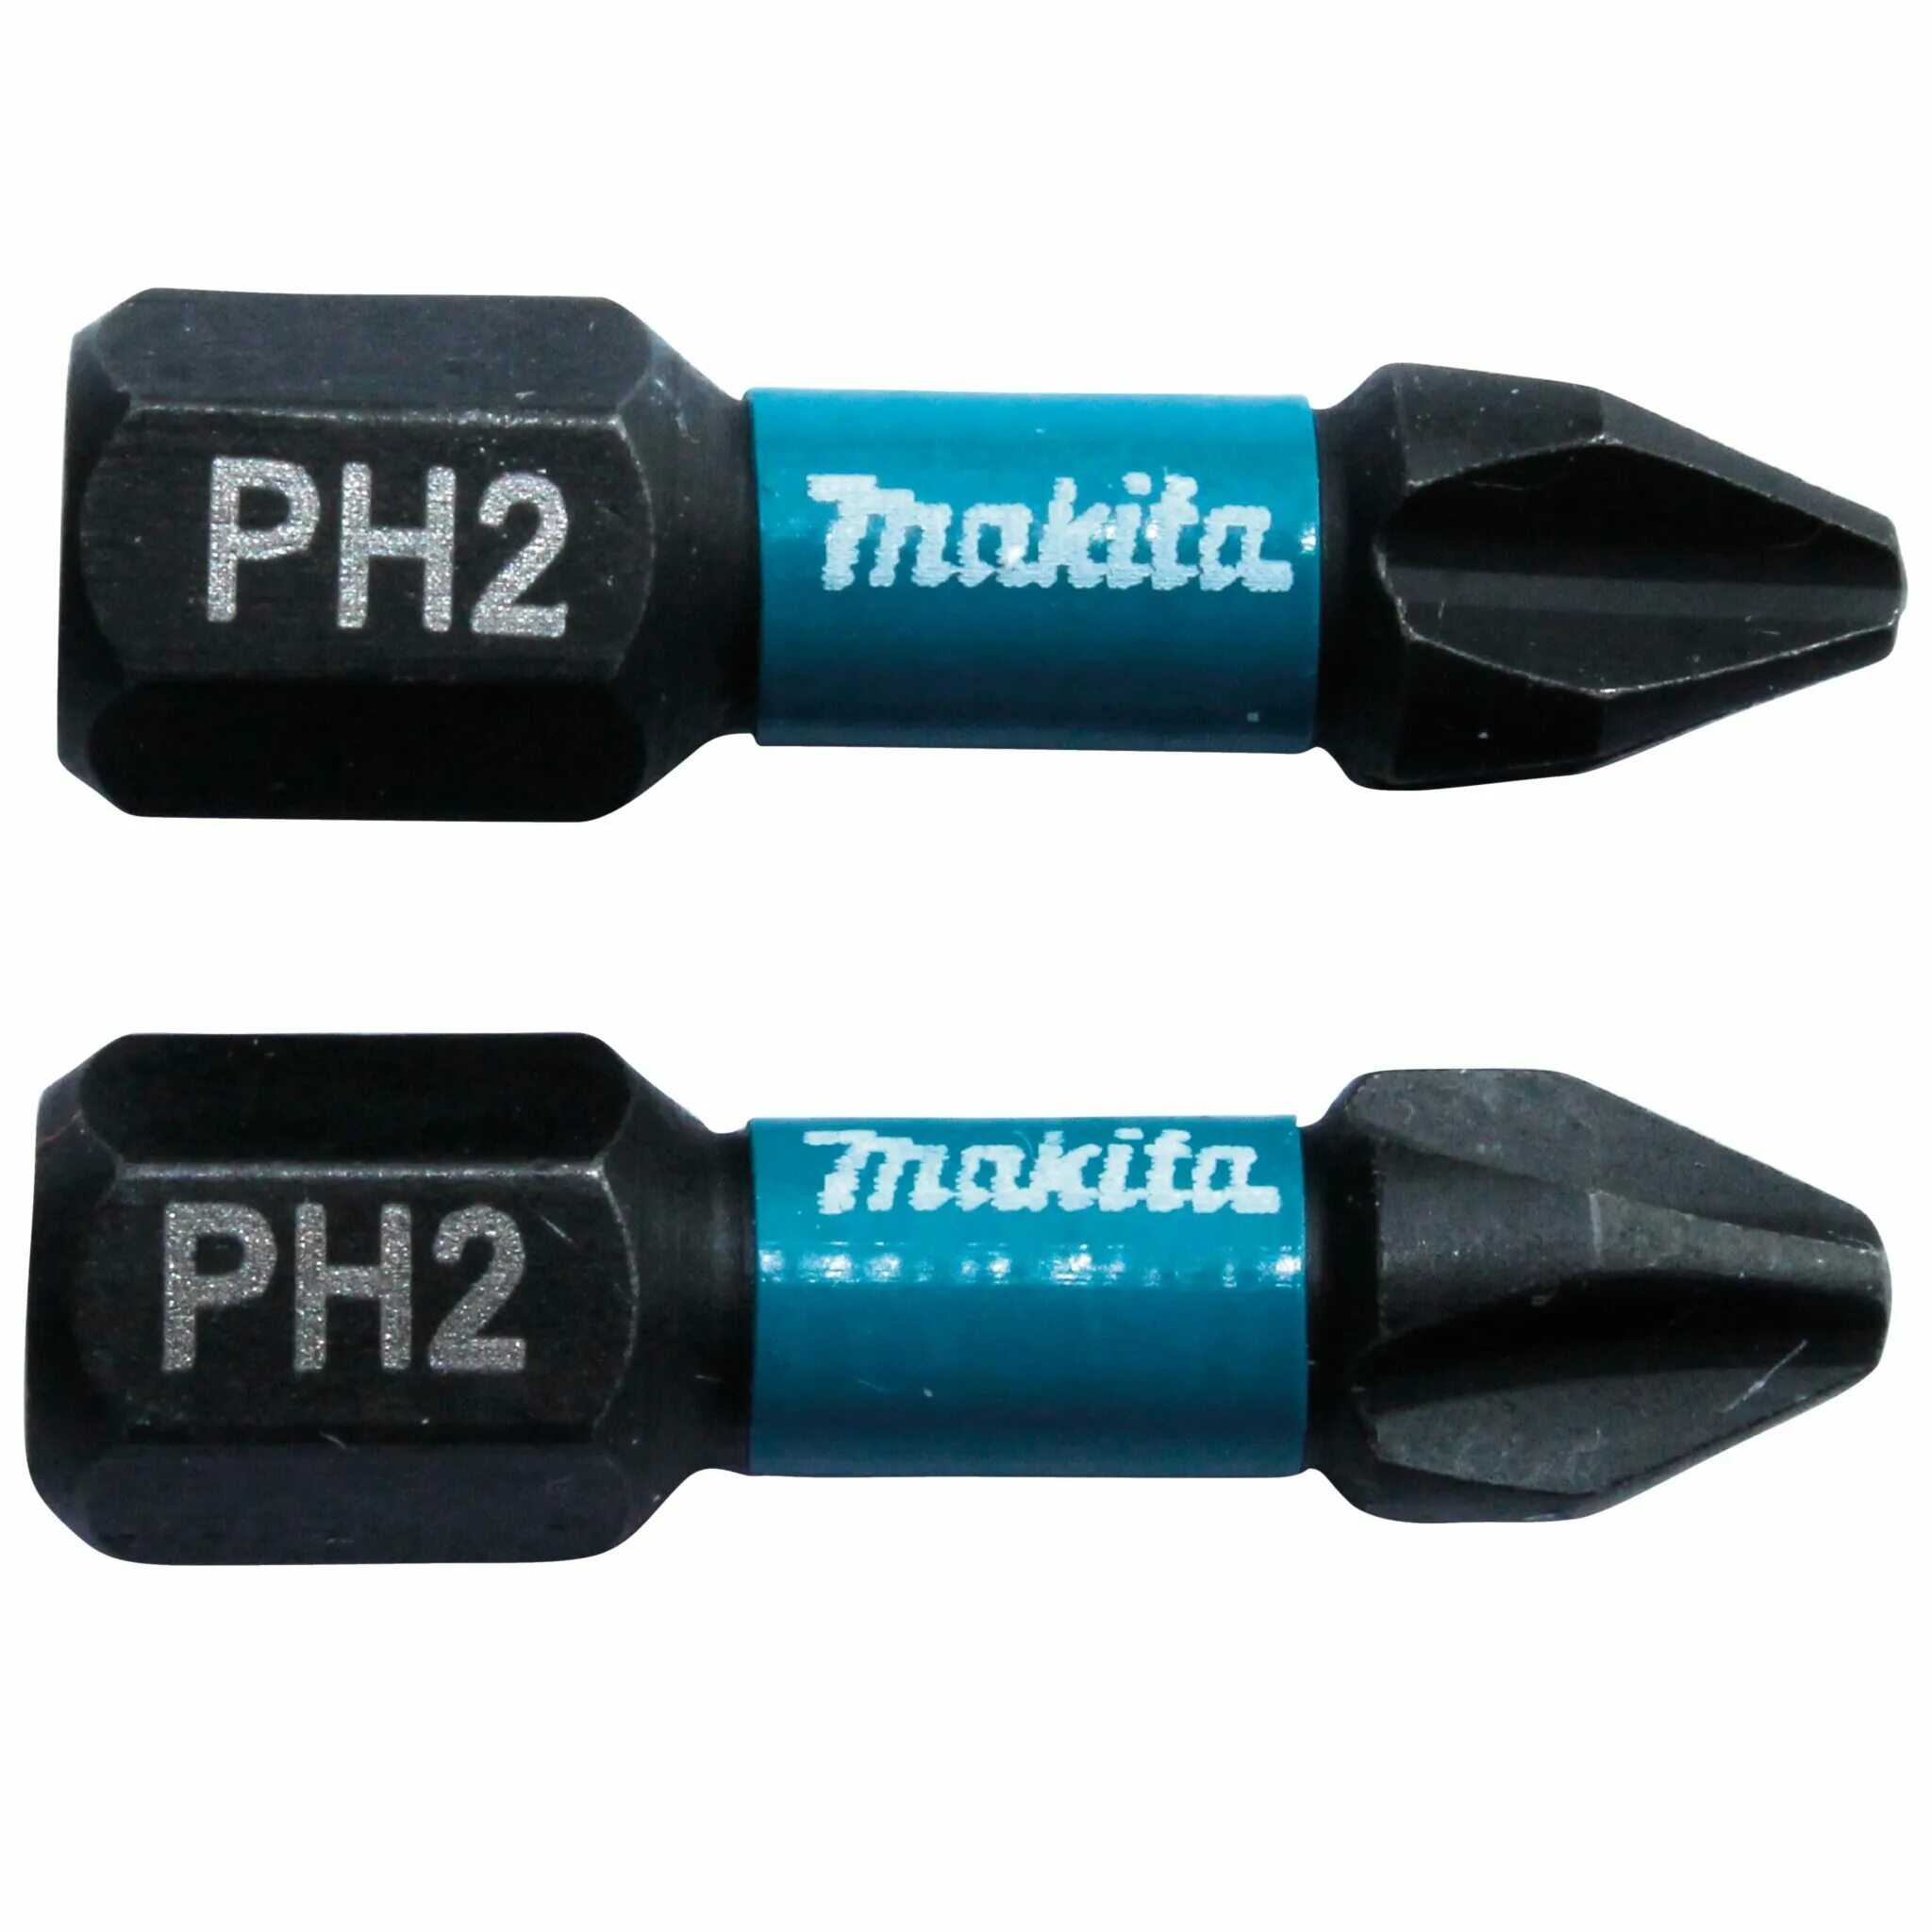 Купить ударные биты. Бита Макита ph2. Биты PH 25 мм Makita. Бита Makita Impact Black ph2. S2 ph2 бита Макита набор 200 штук.